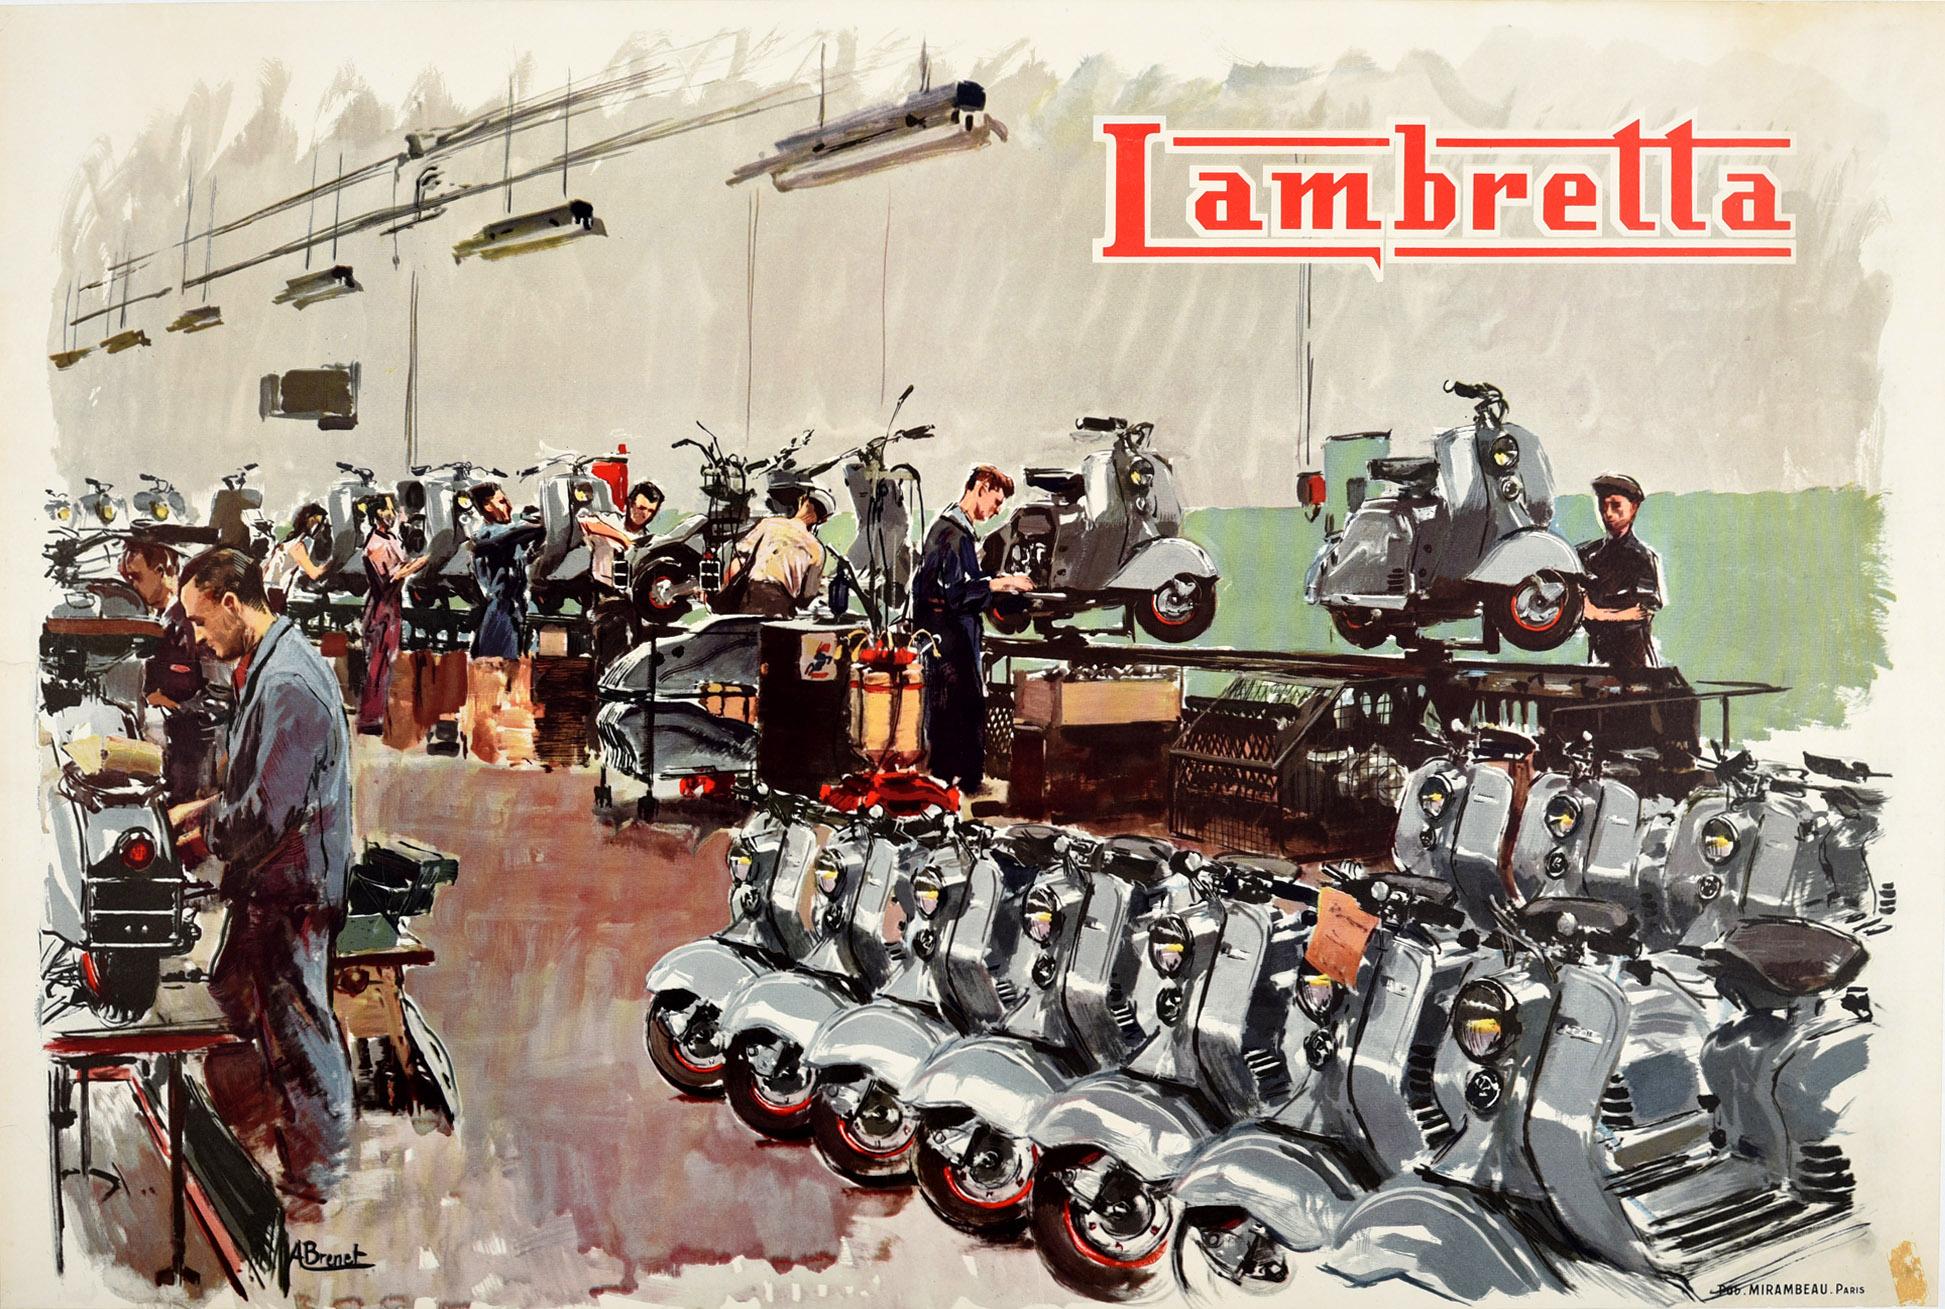 Albert Brenet Print - Original Vintage Poster Lambretta Scooter Factory Workshop Advertising Art